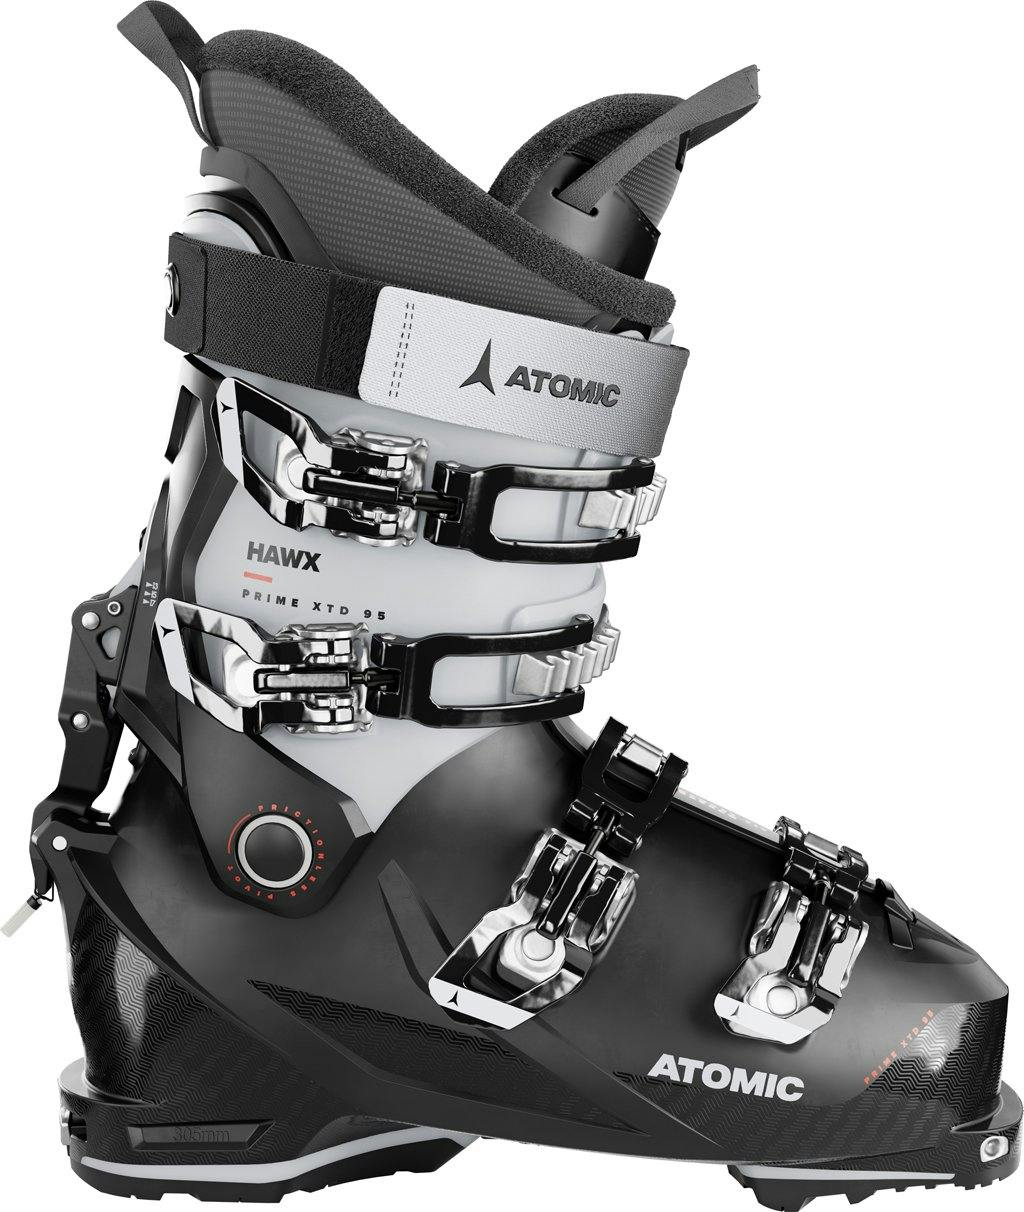 Product image for Hawx Prime Xtd 95 W GW Ski Boot - Women's